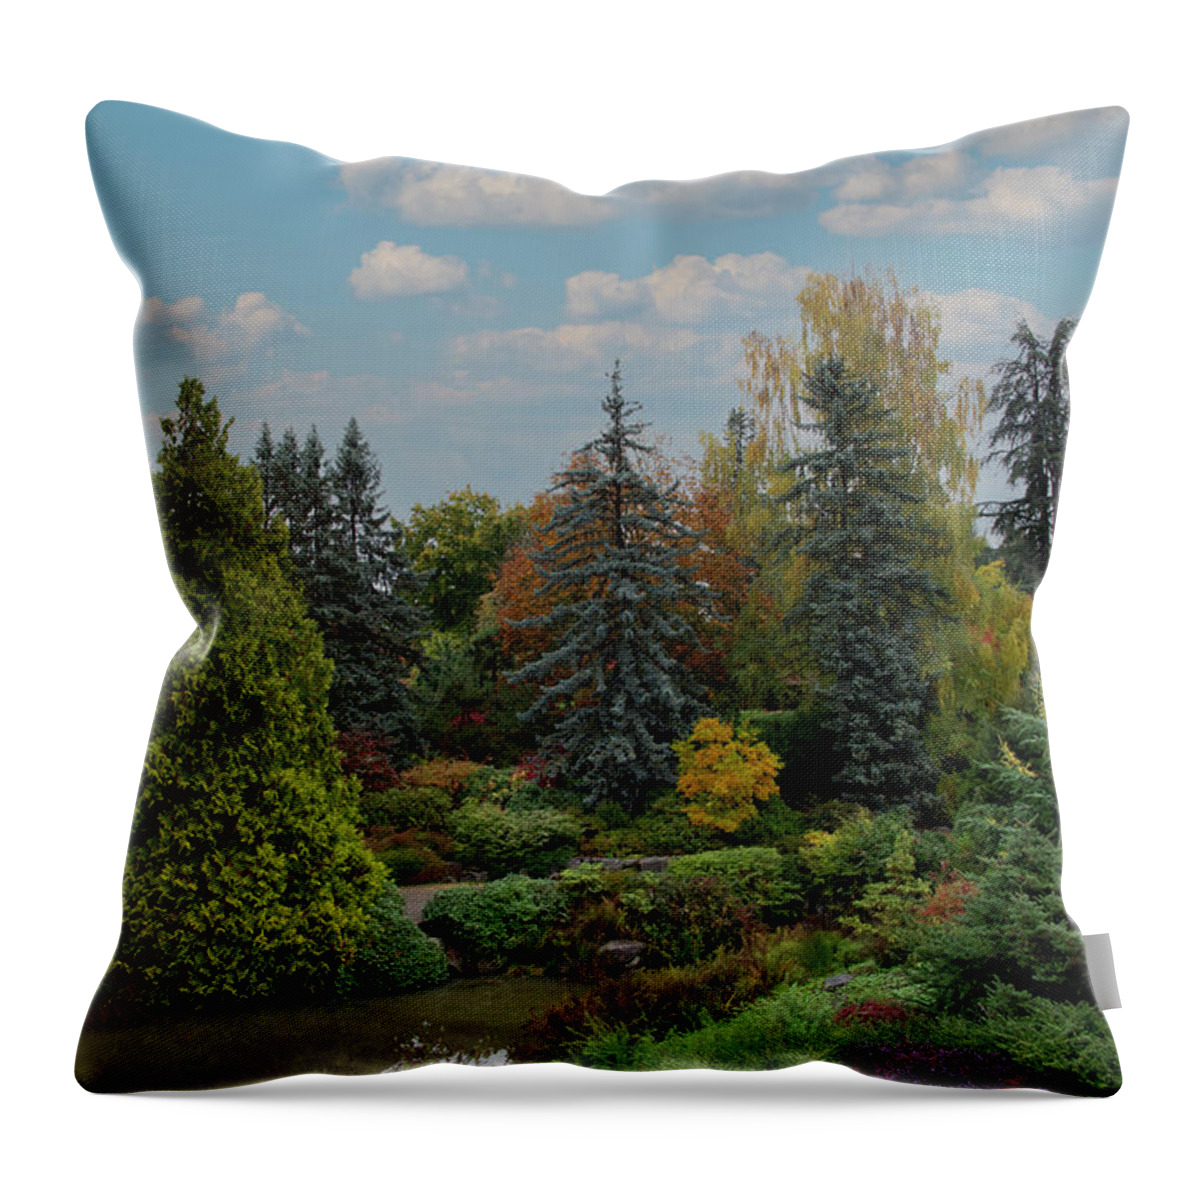 Botanical Garden Throw Pillow featuring the photograph Scenic Garden by Jerry Cahill